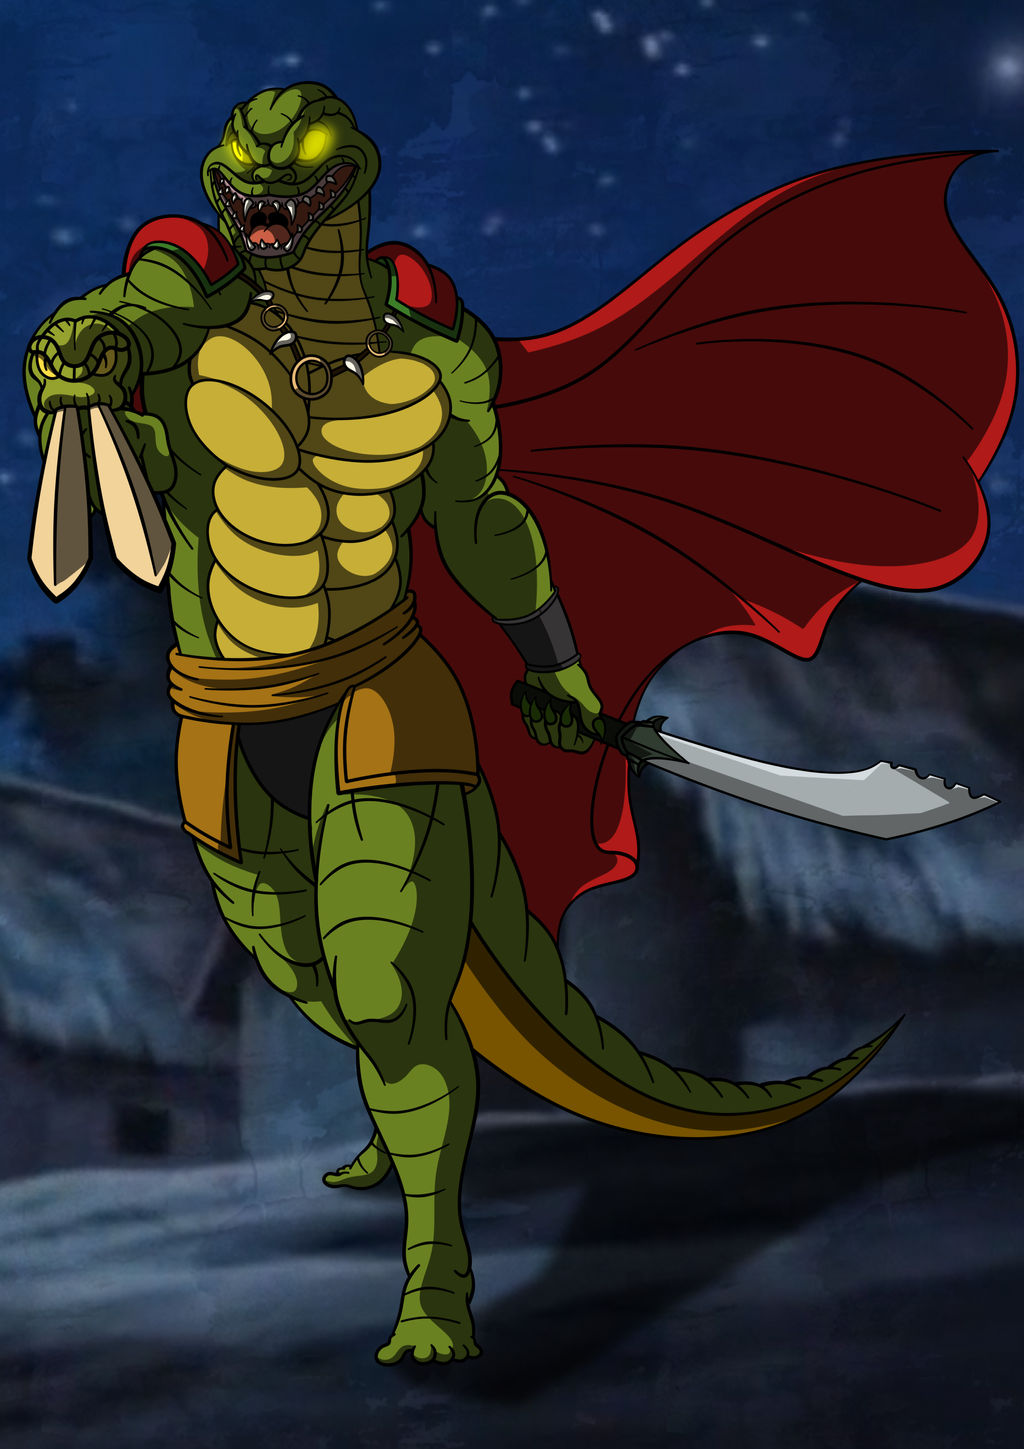 Wrath-Amon in Serpent Form – Conan Animation